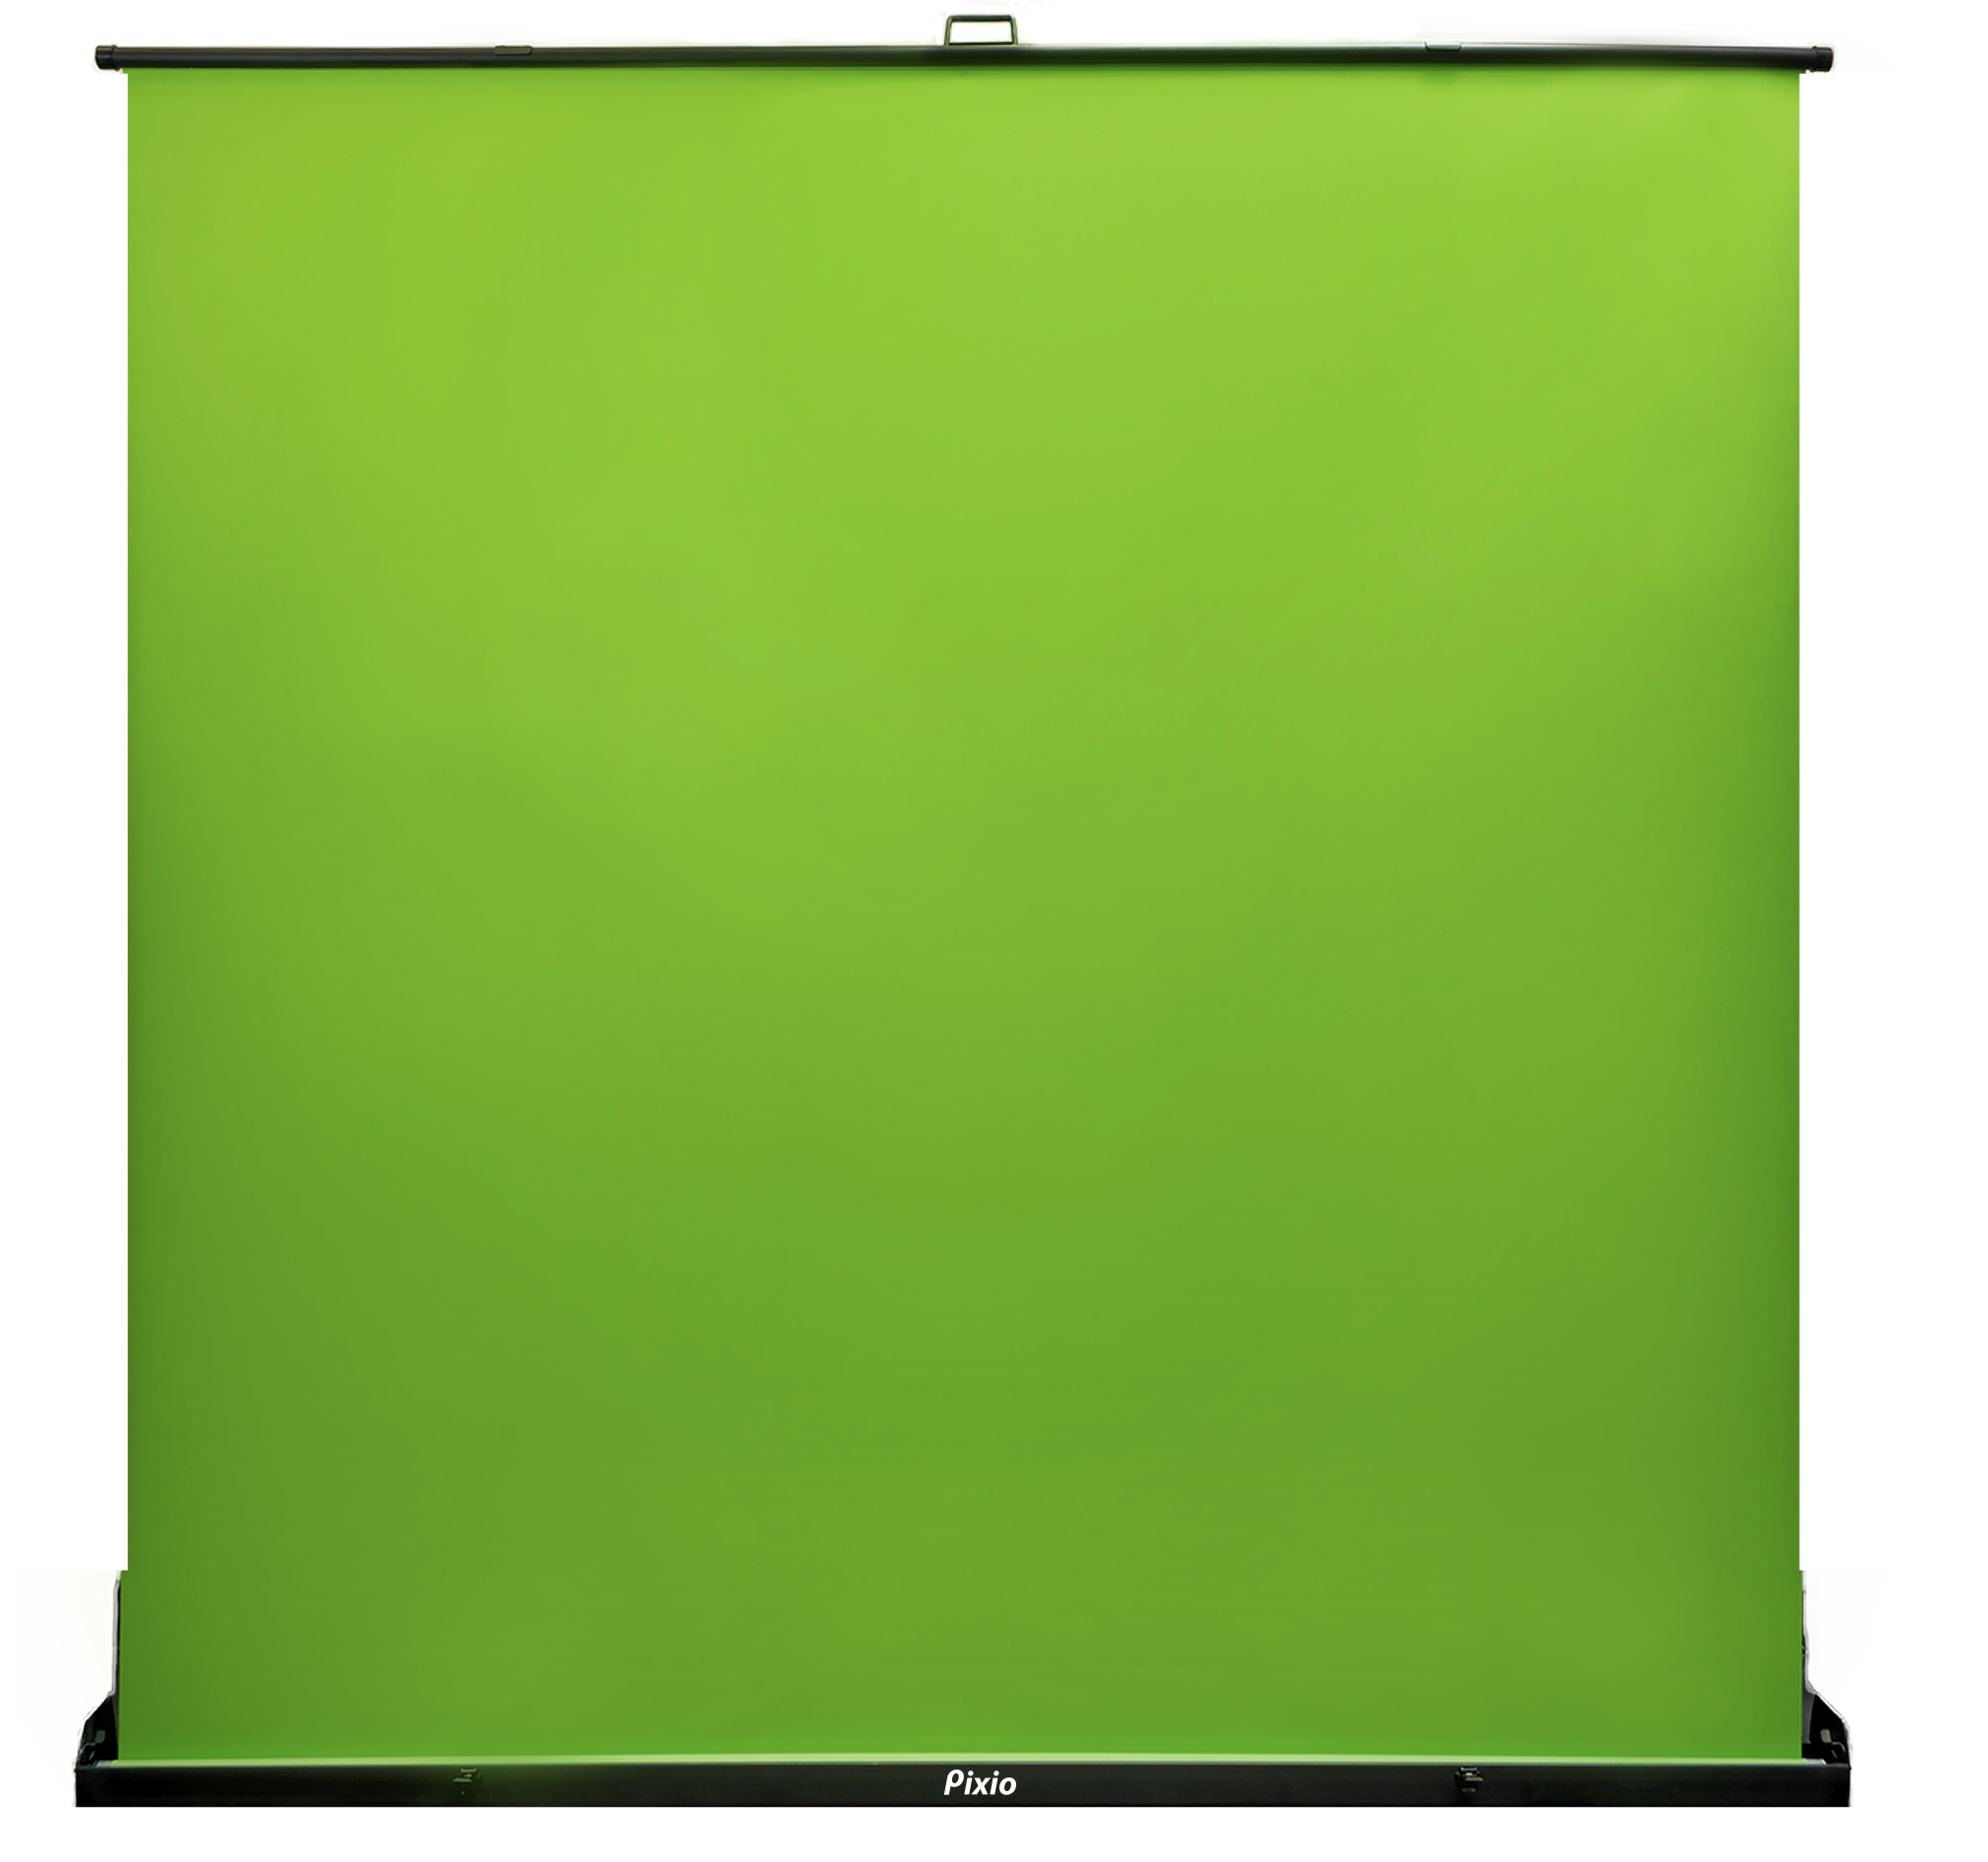 Pixio Green Screen XL Wide/XL Ultrawide - Certified Refurbished